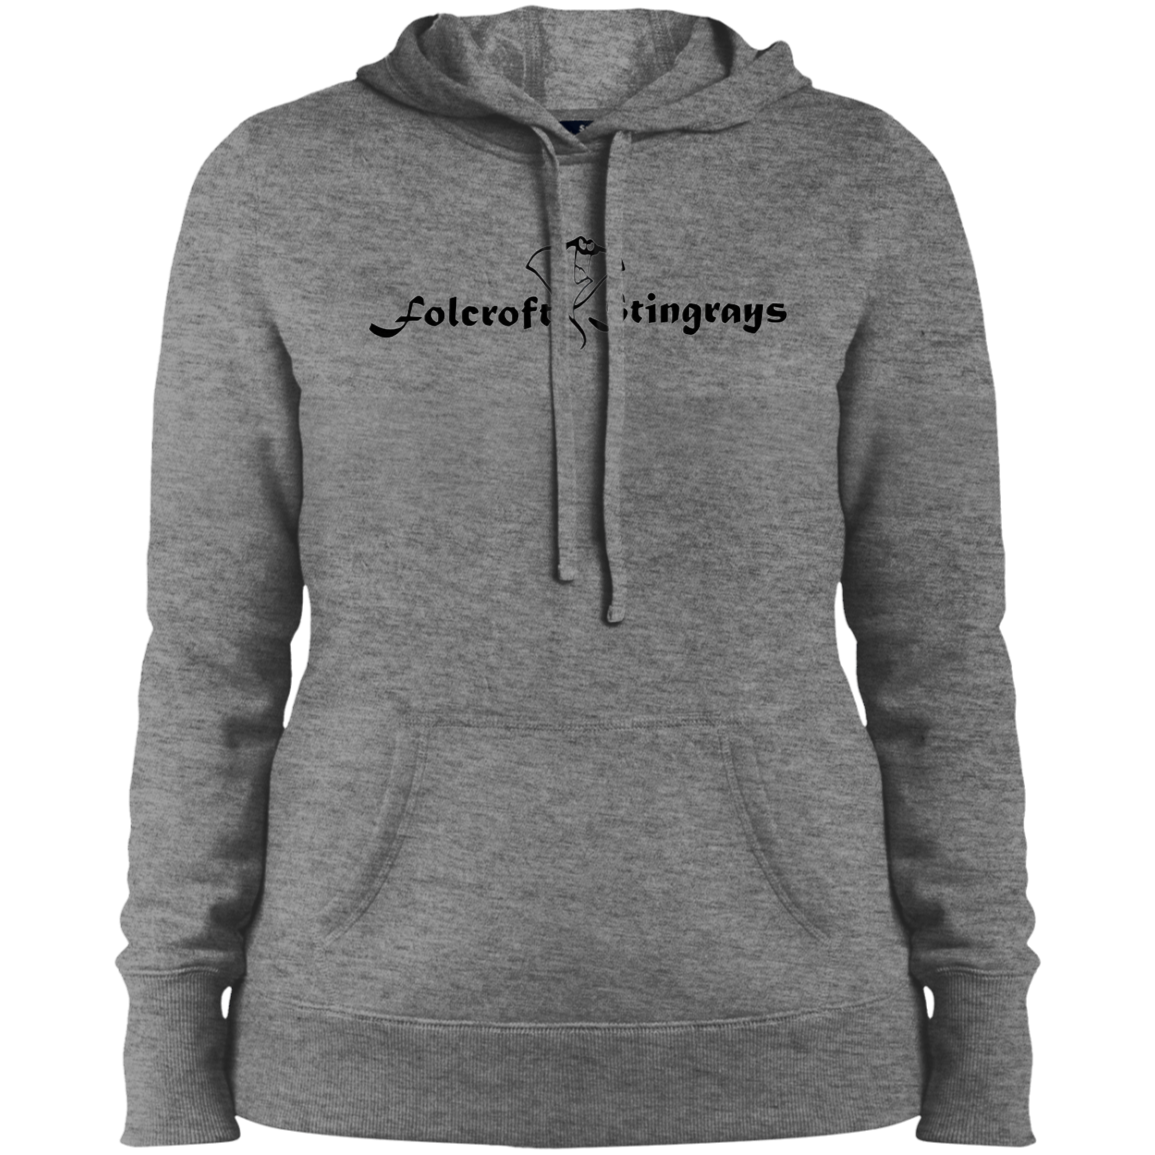 Folcroft TeamStore Ladies' Pullover Hooded Sweatshirt